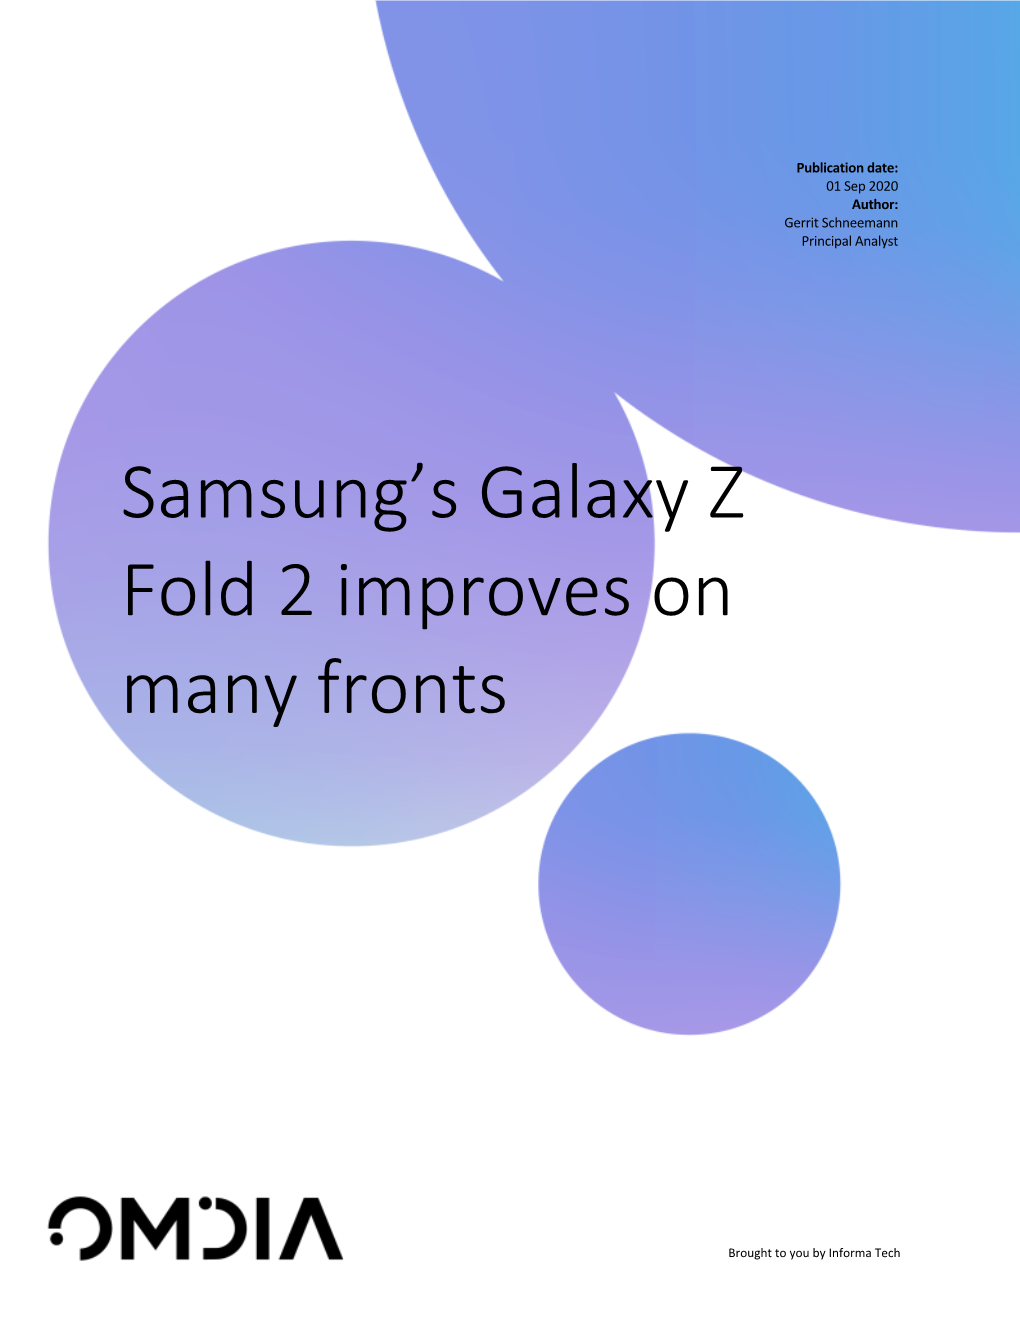 Samsung's Galaxy Z Fold 2 Improves on Many Fronts